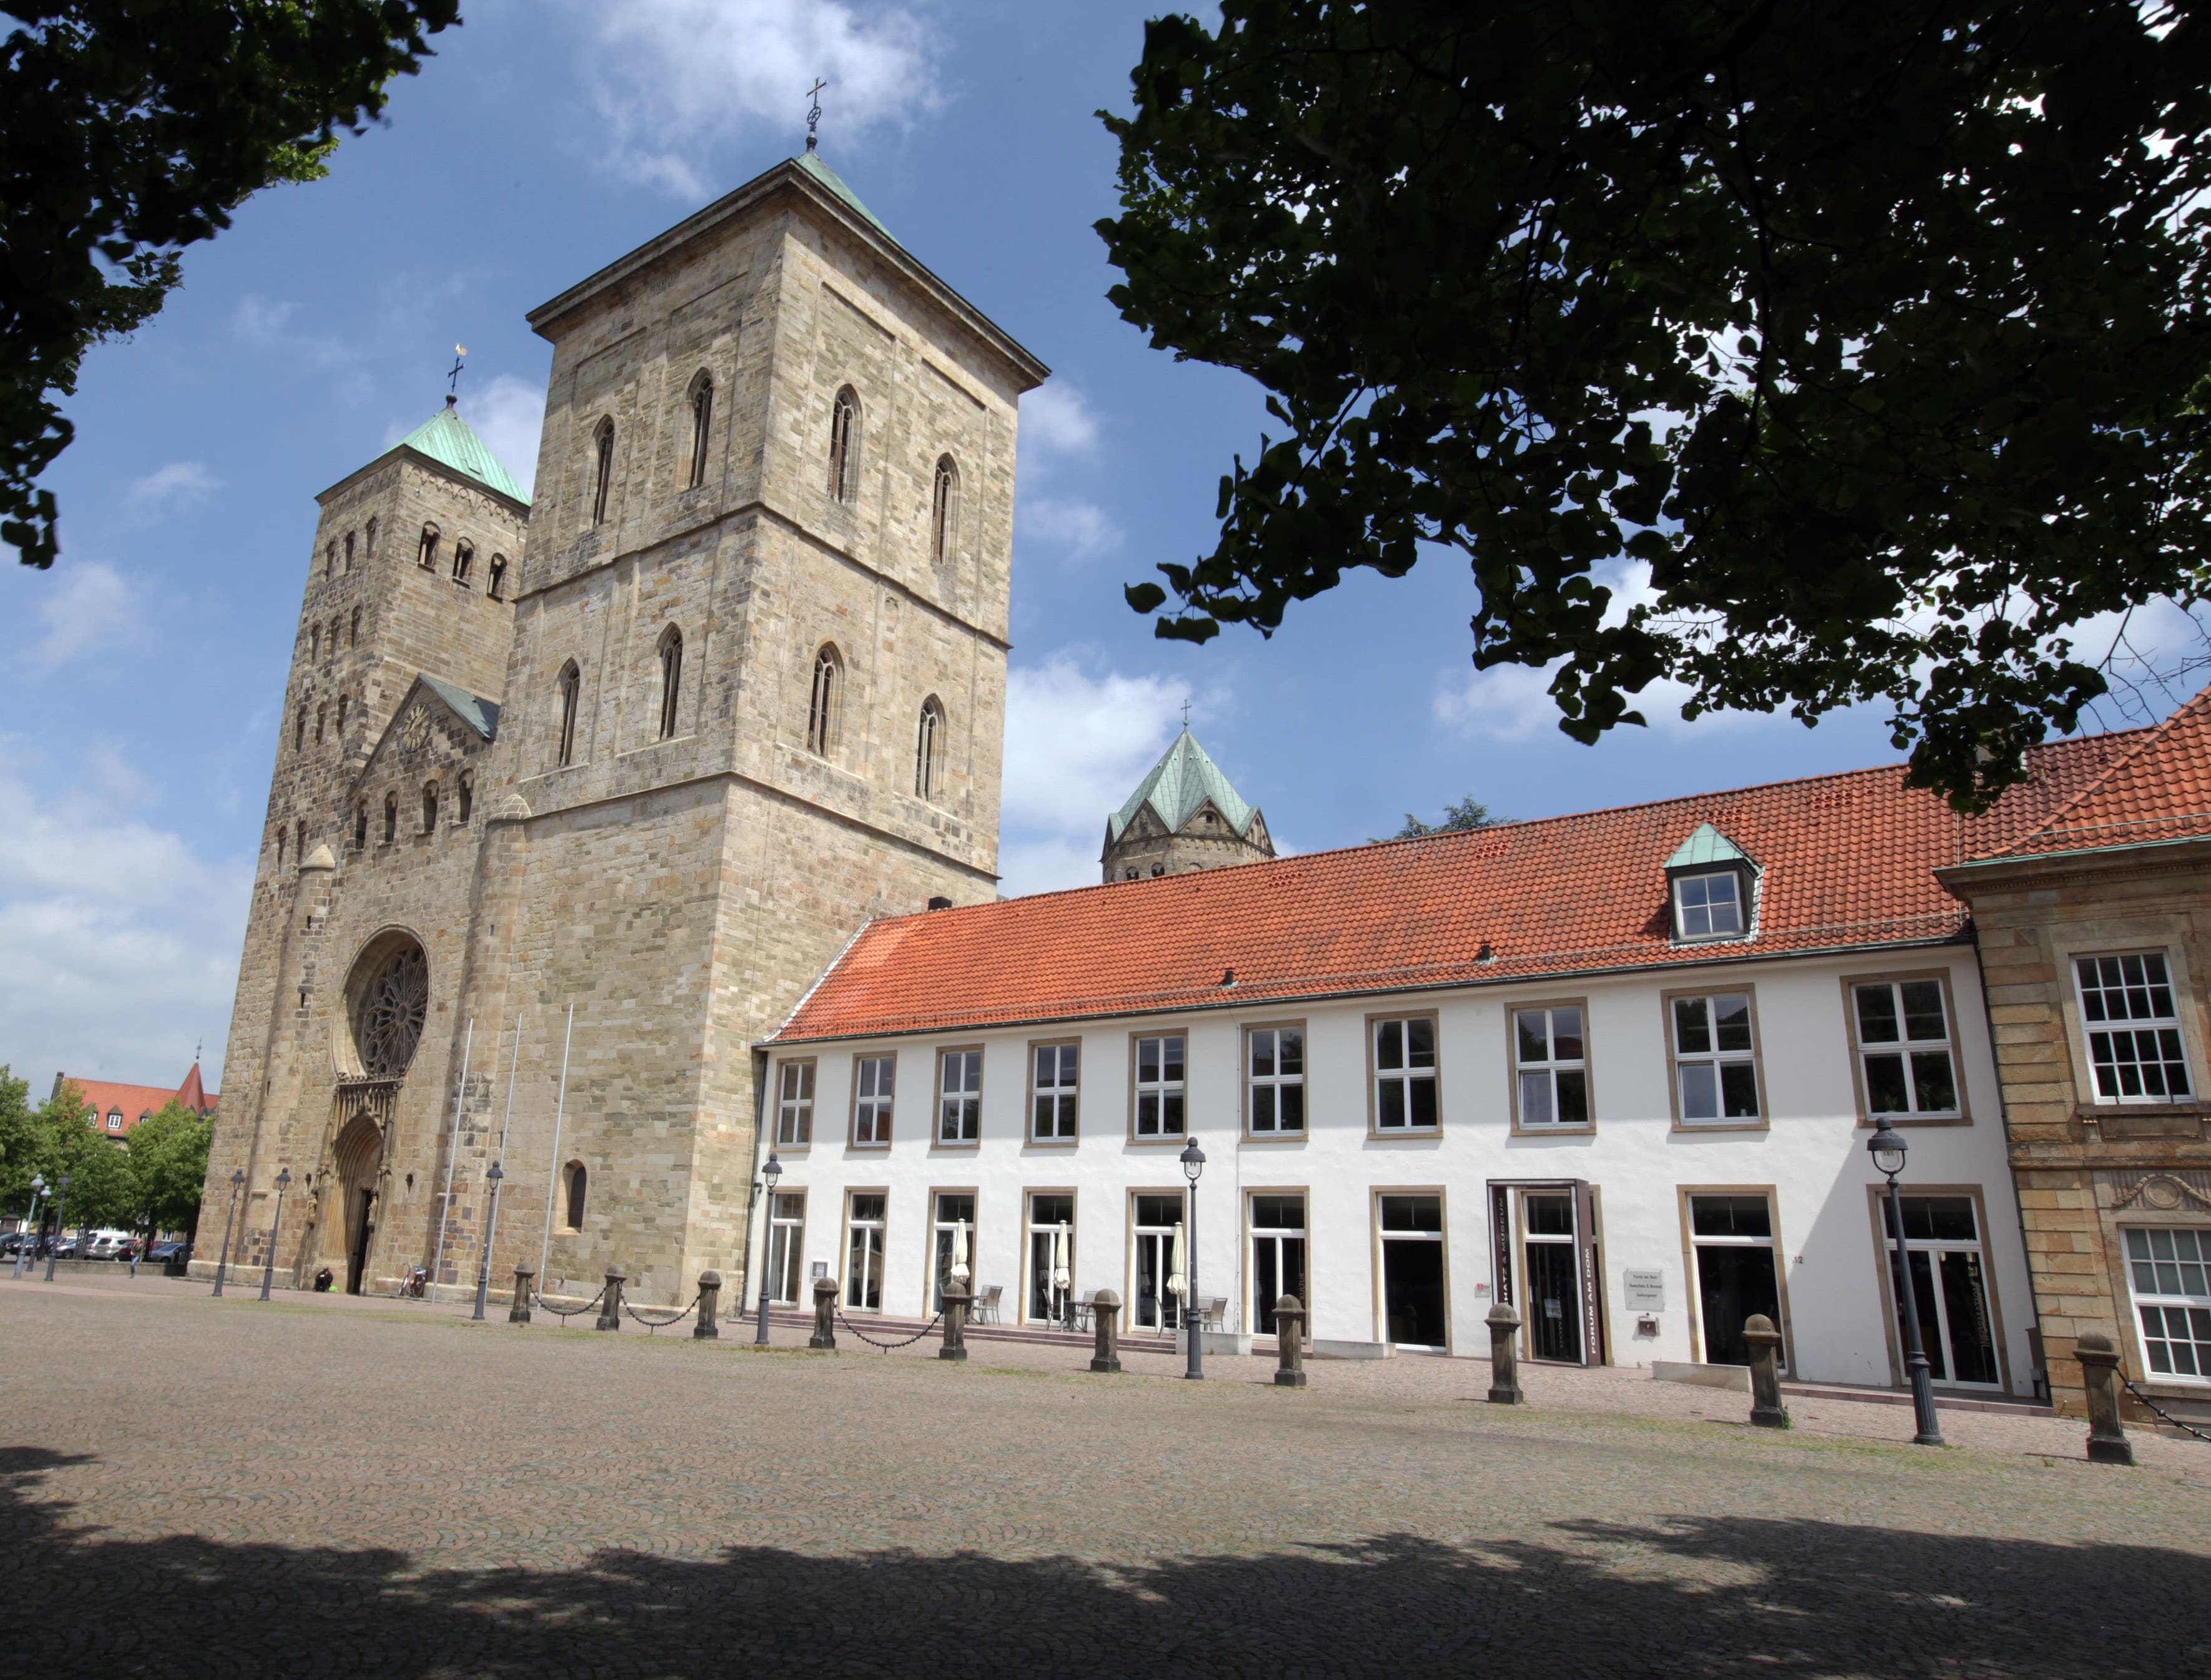 Dom St. Petrus Osnabrück mit Forum am Dom